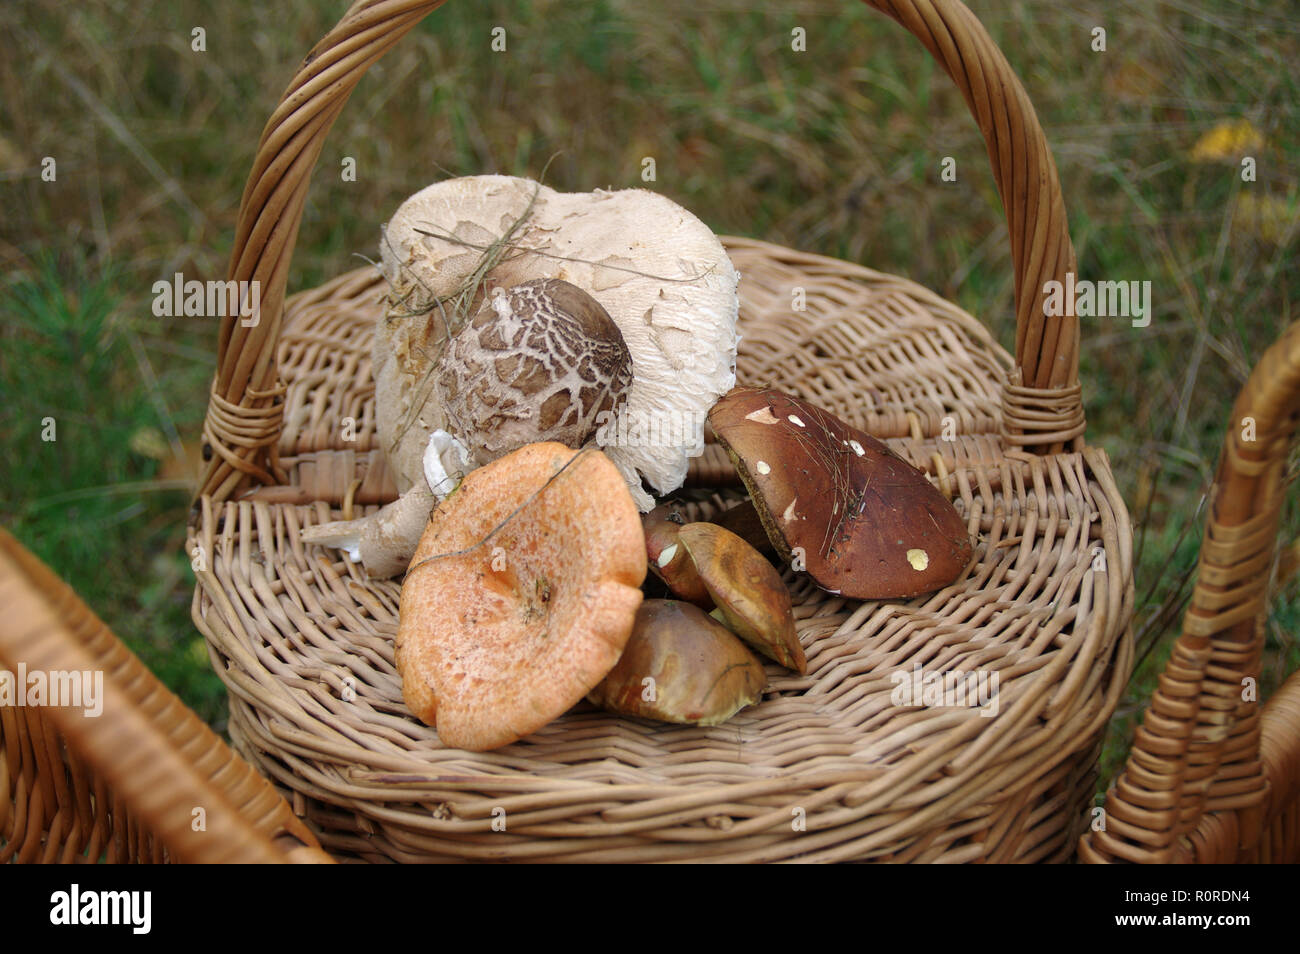 Seasonal mushrooming in forest. Raw edible mushrooms on wicker basket. Stock Photo